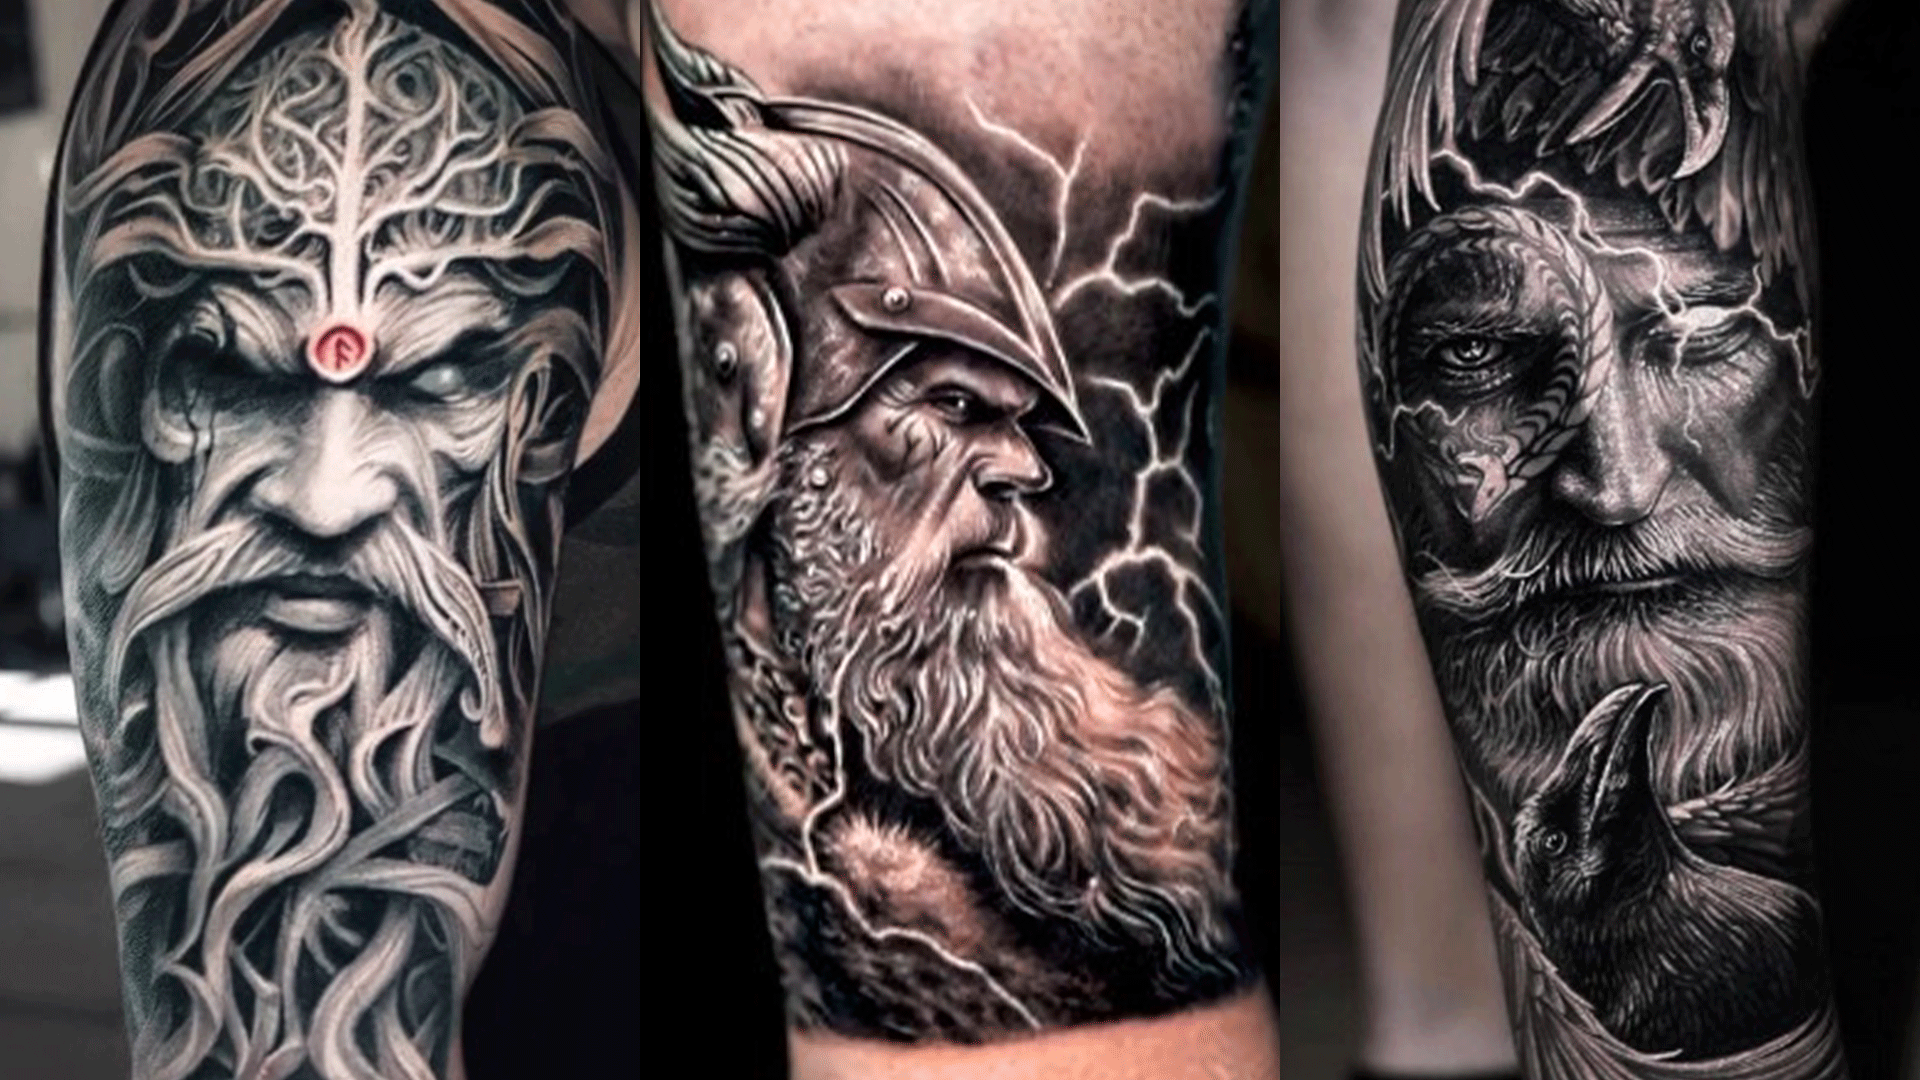 10 Best Mythological Tattoos: Best Ideas For Myth Tattoos – MrInkwells